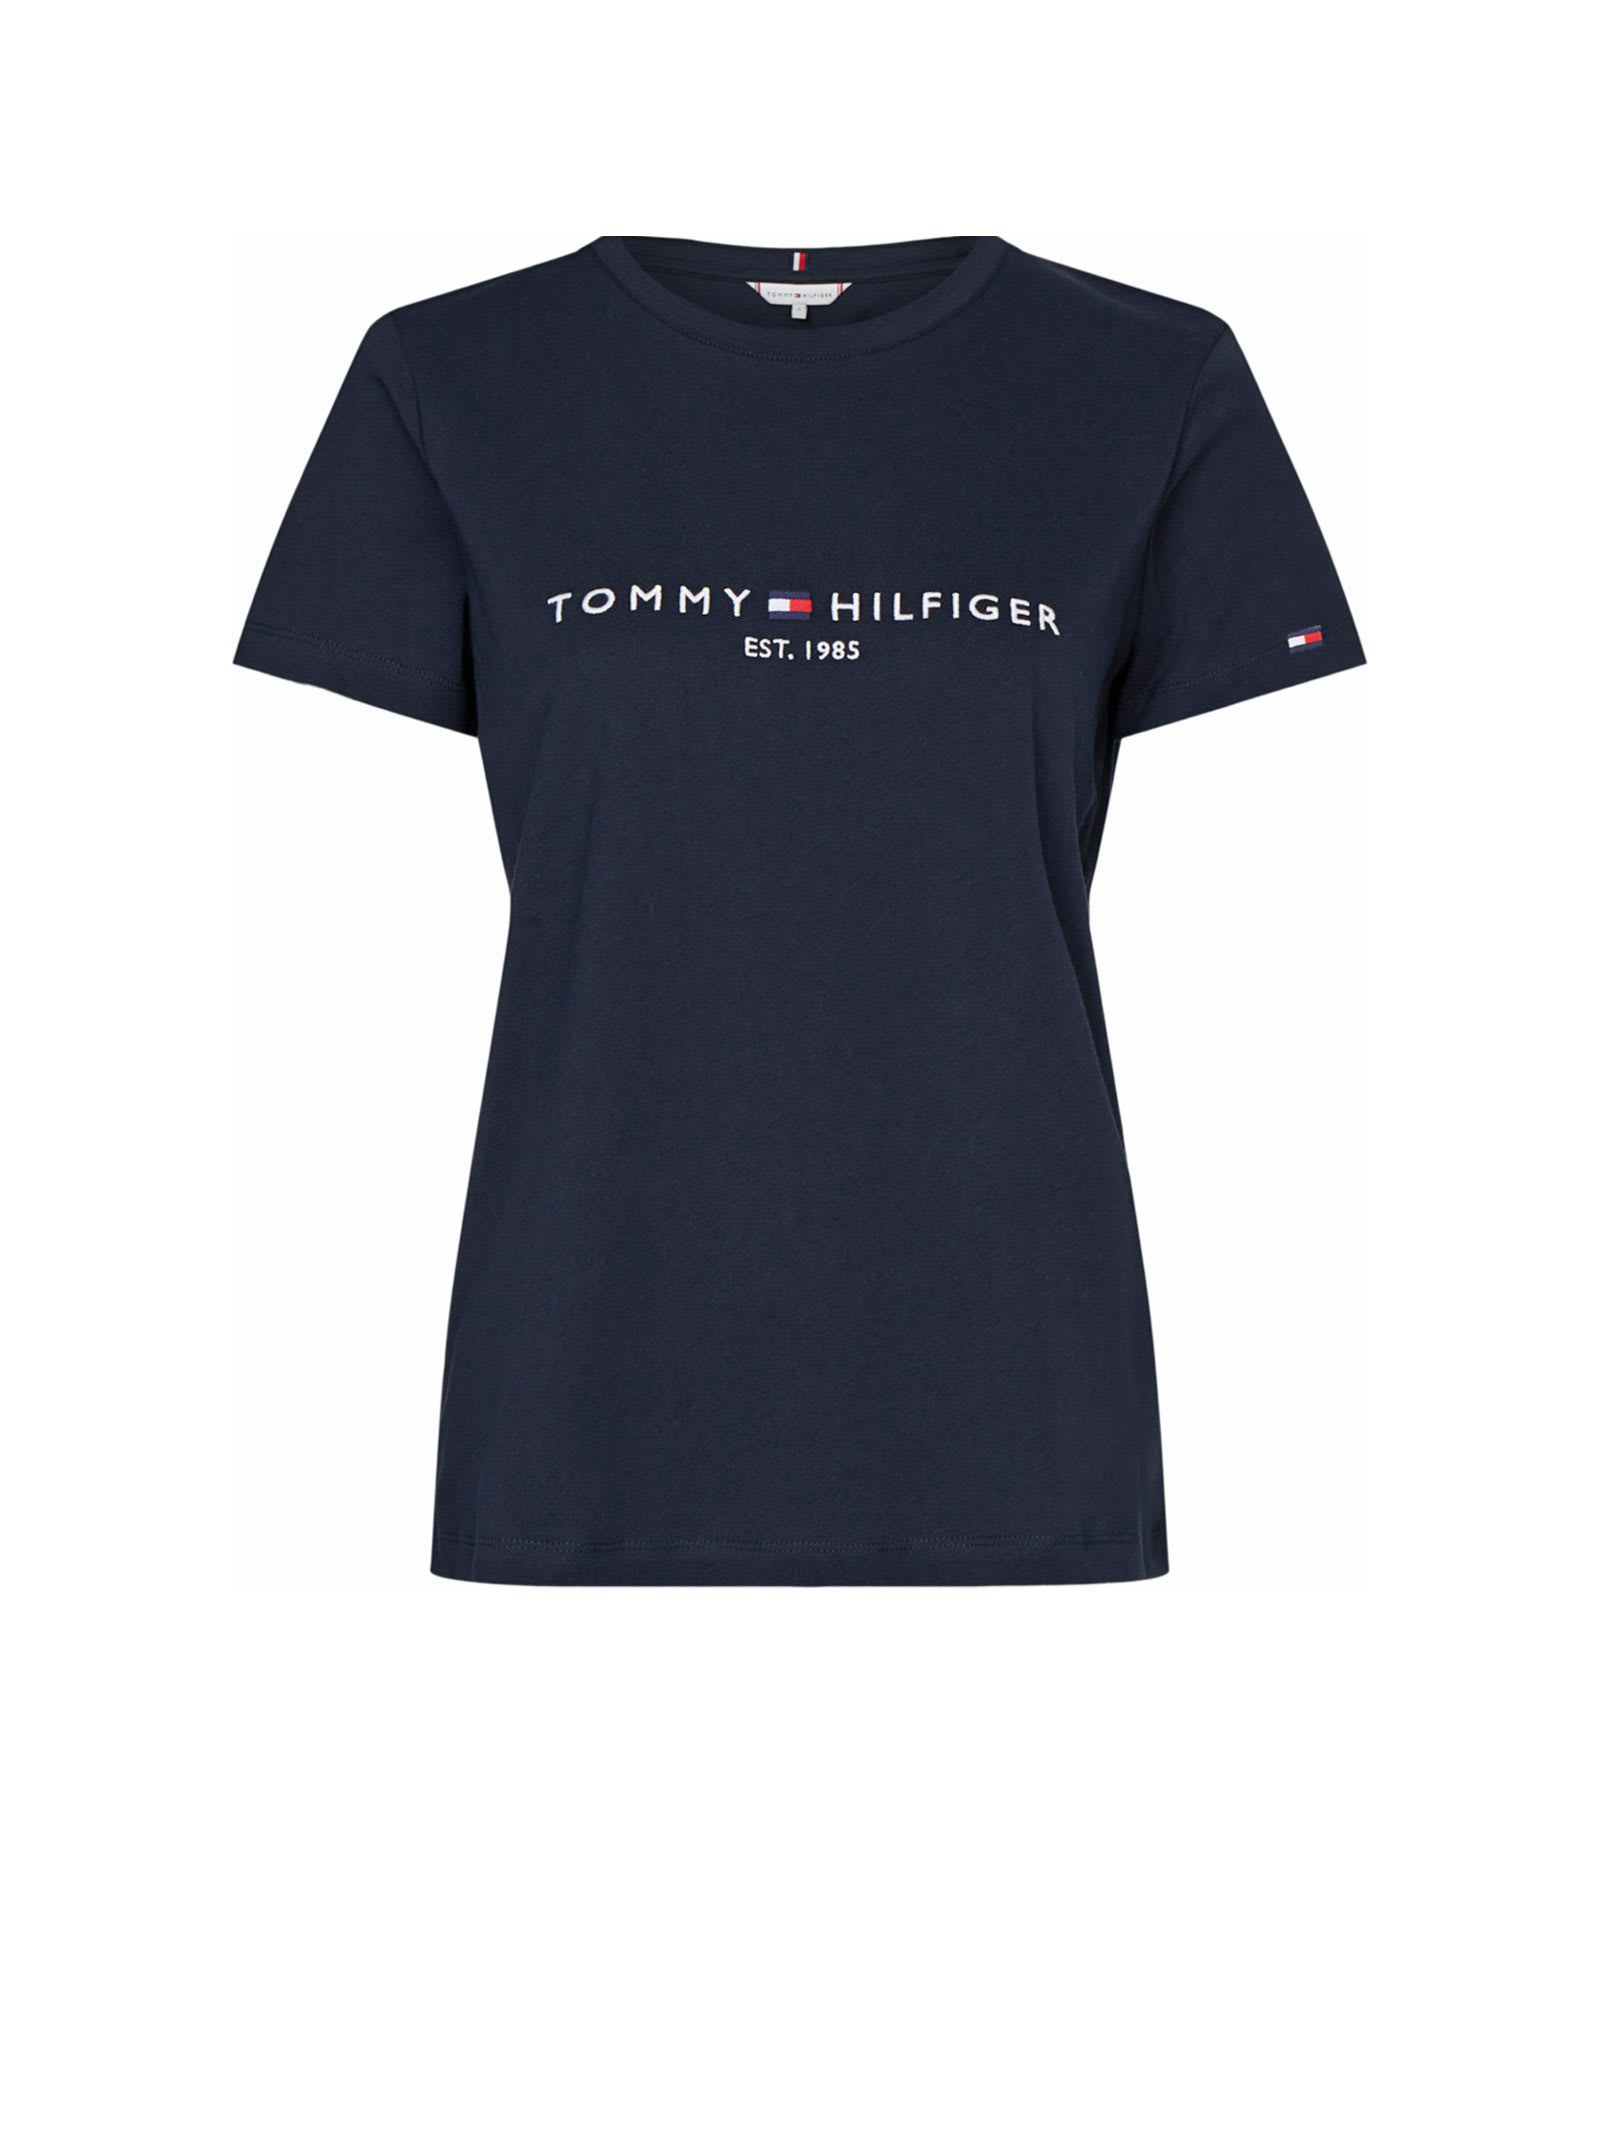 Tommy Hilfiger Blue Cotton T-shirt